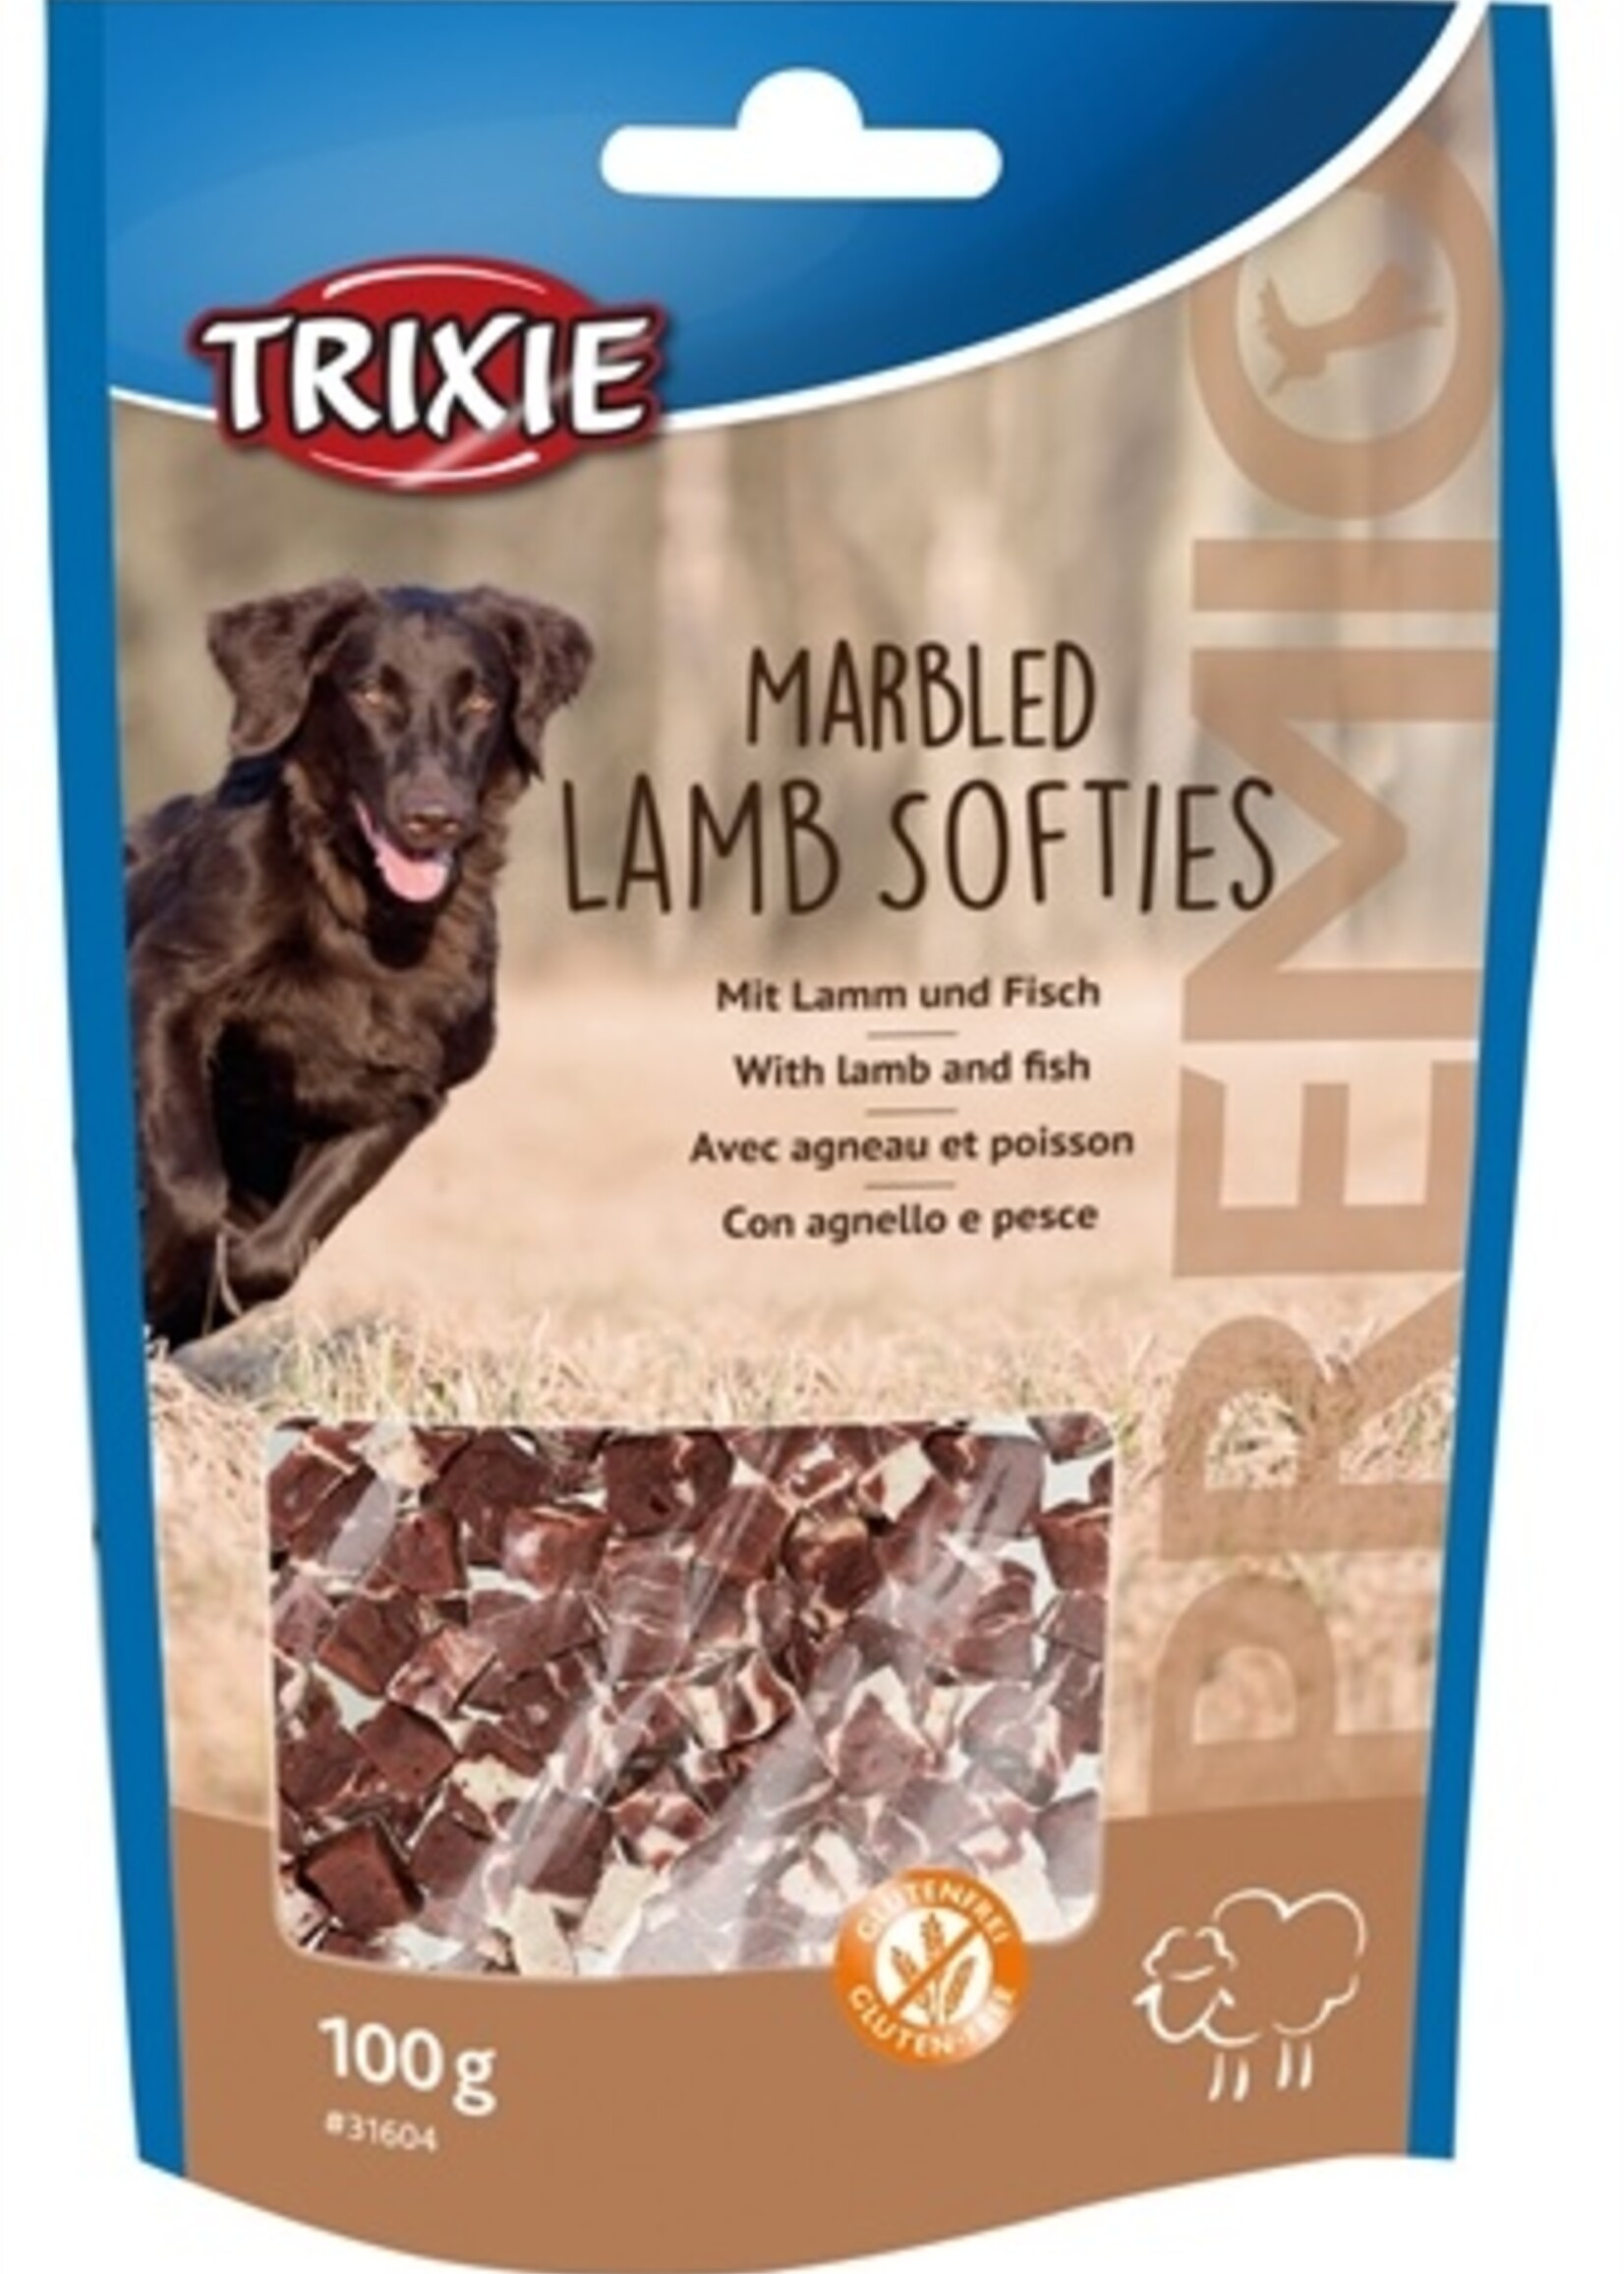 Trixie Trixie premio marbled lamb softies